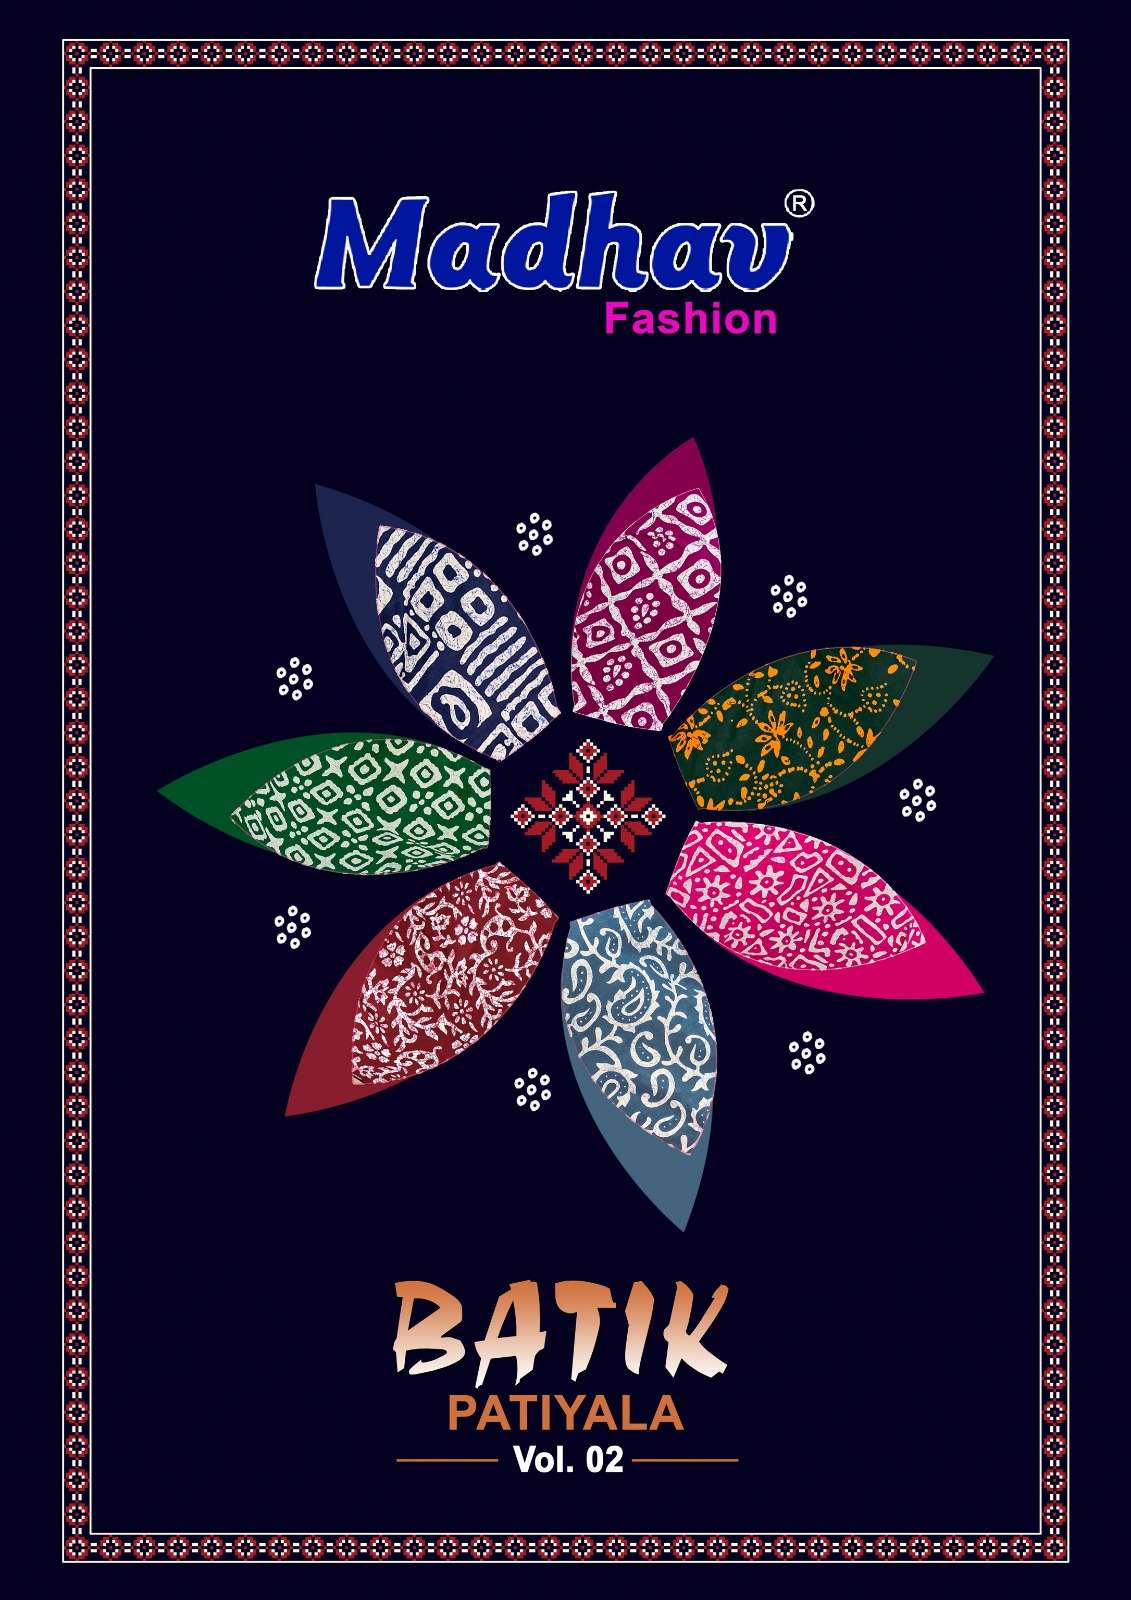 product/Batik patiyala vol 2_01.jpeg